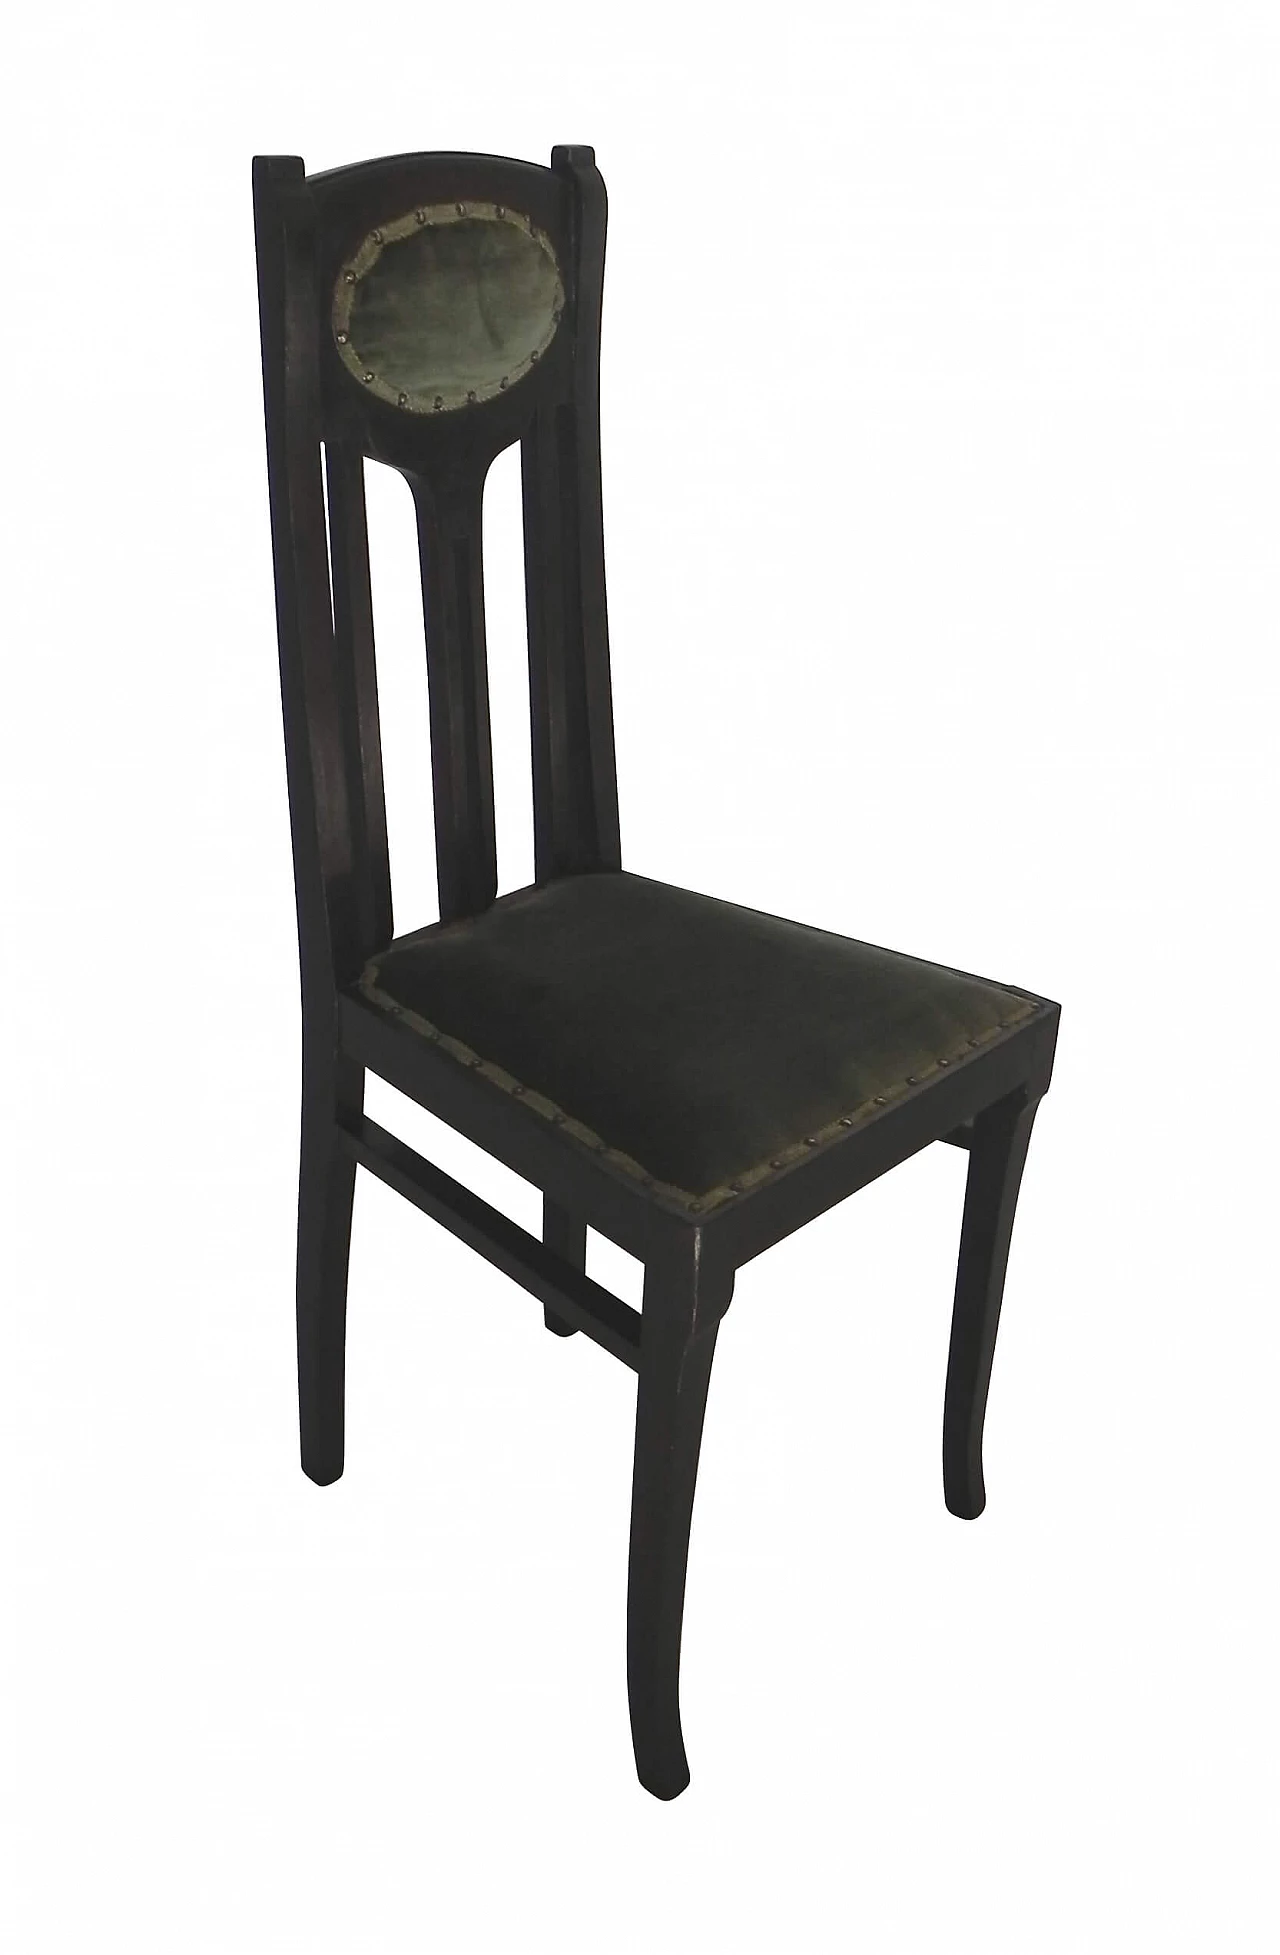 Mackintosh style chair, 1920s 1283471